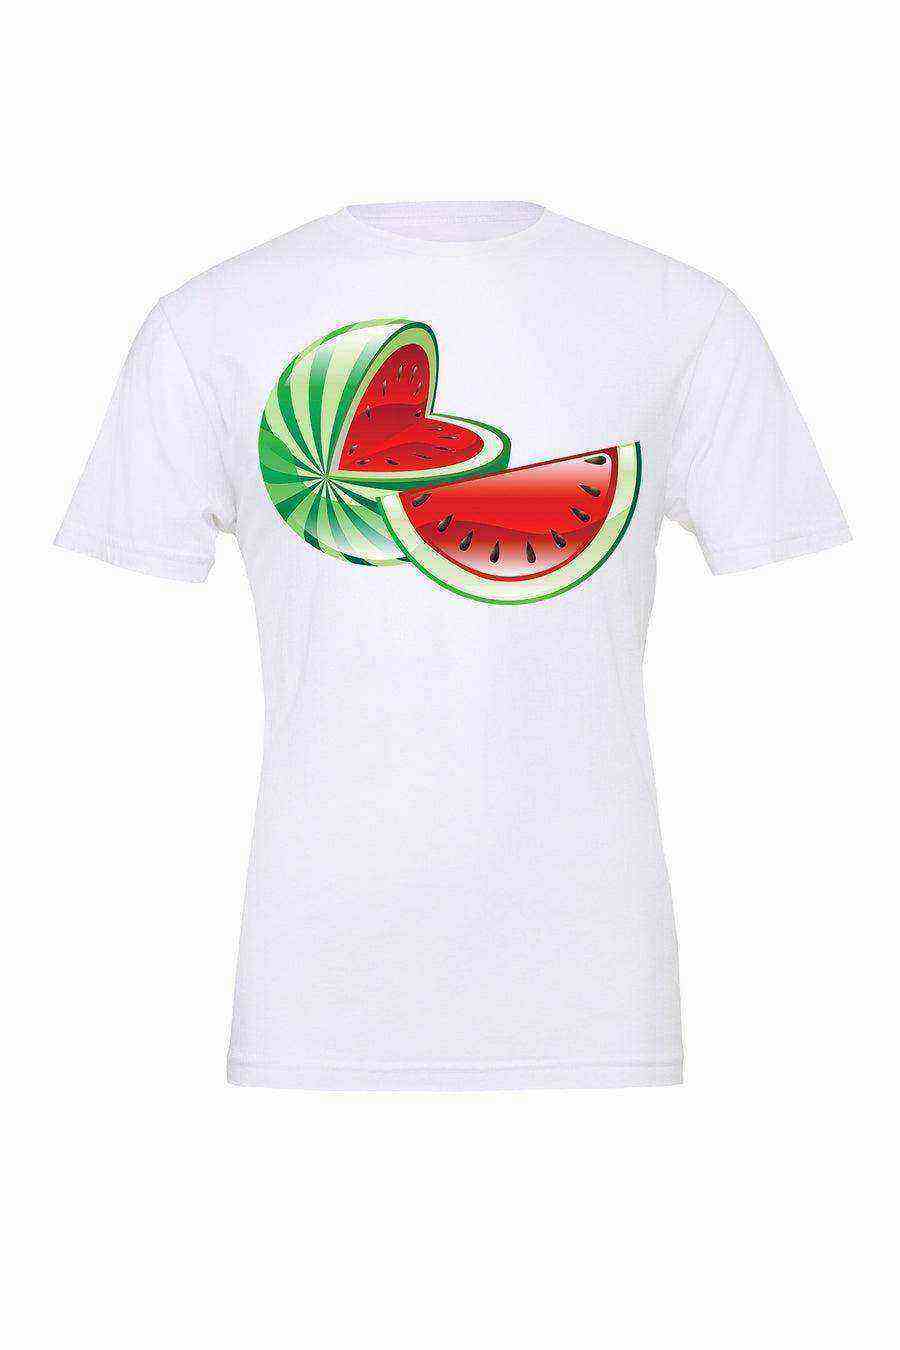 Watermelon Shirt - Dylan's Tees